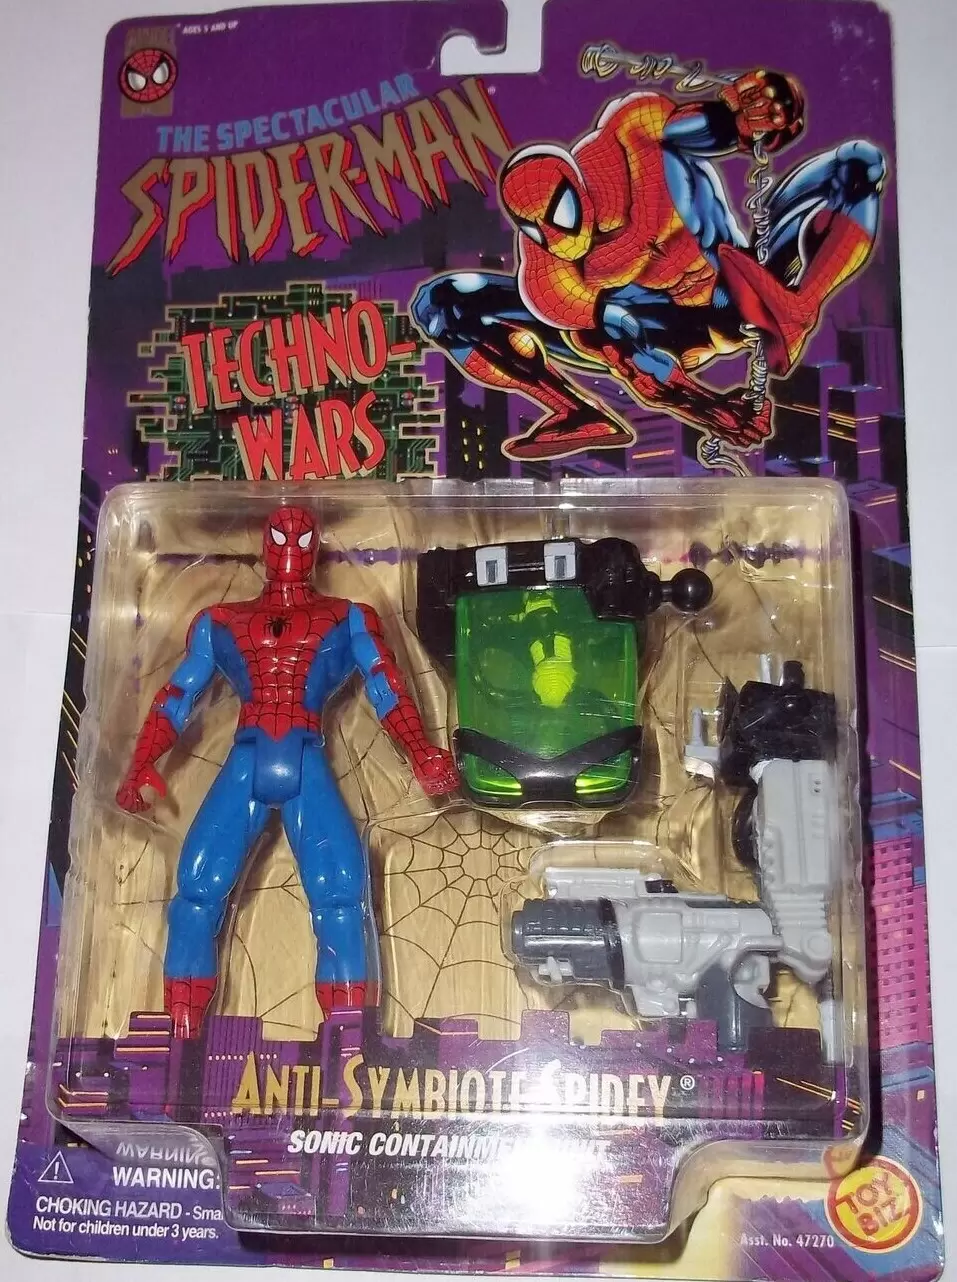 spectacular spider man mysterio toy